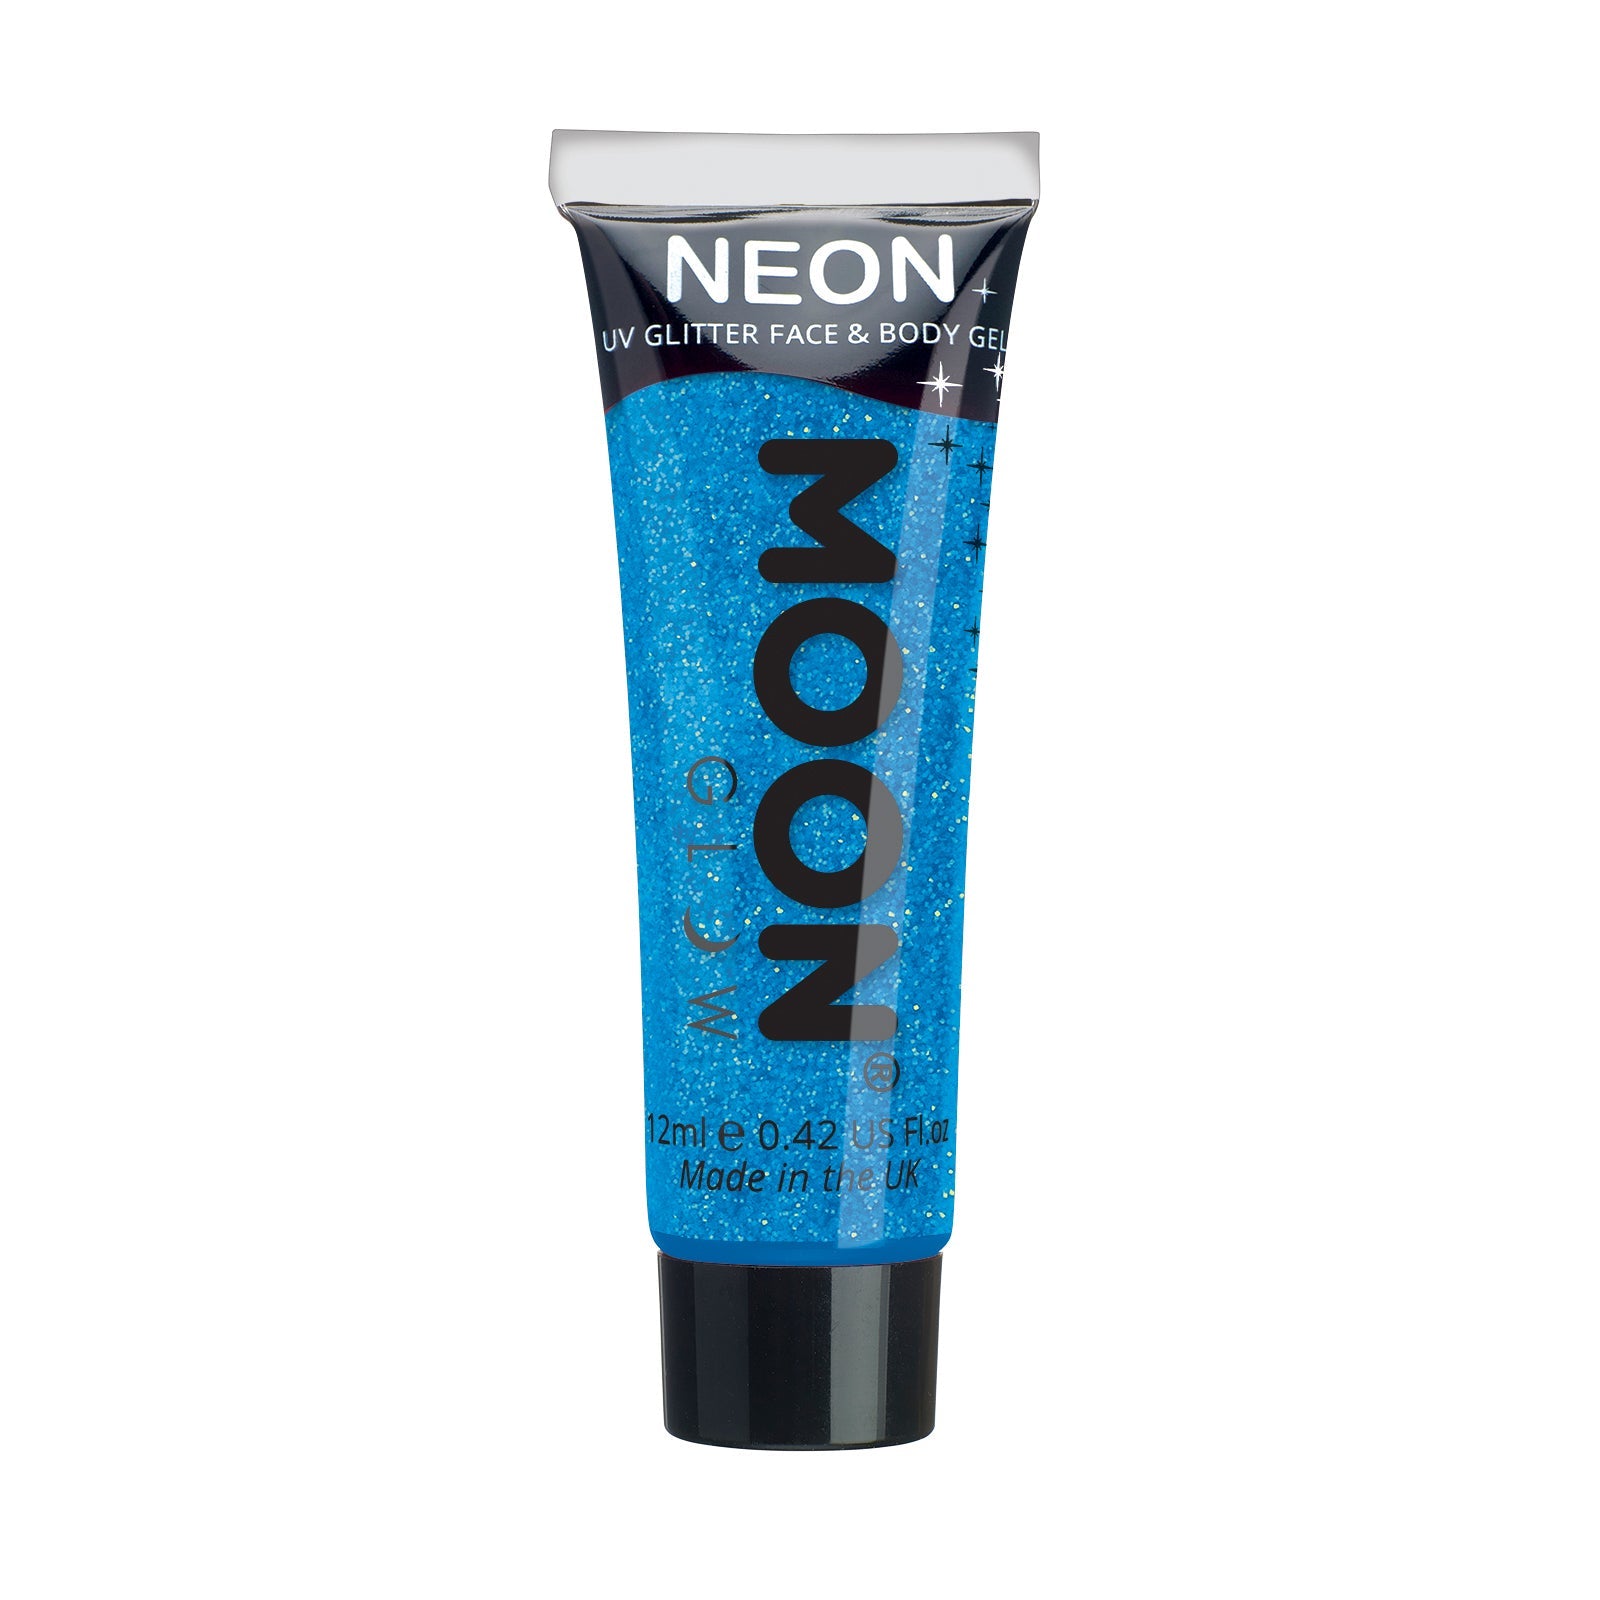 Blue - Neon UV Glow Blacklight Fine Face & Body Glitter Gel, 12mL. Cosmetically certified, FDA & Health Canada compliant, cruelty free and vegan.